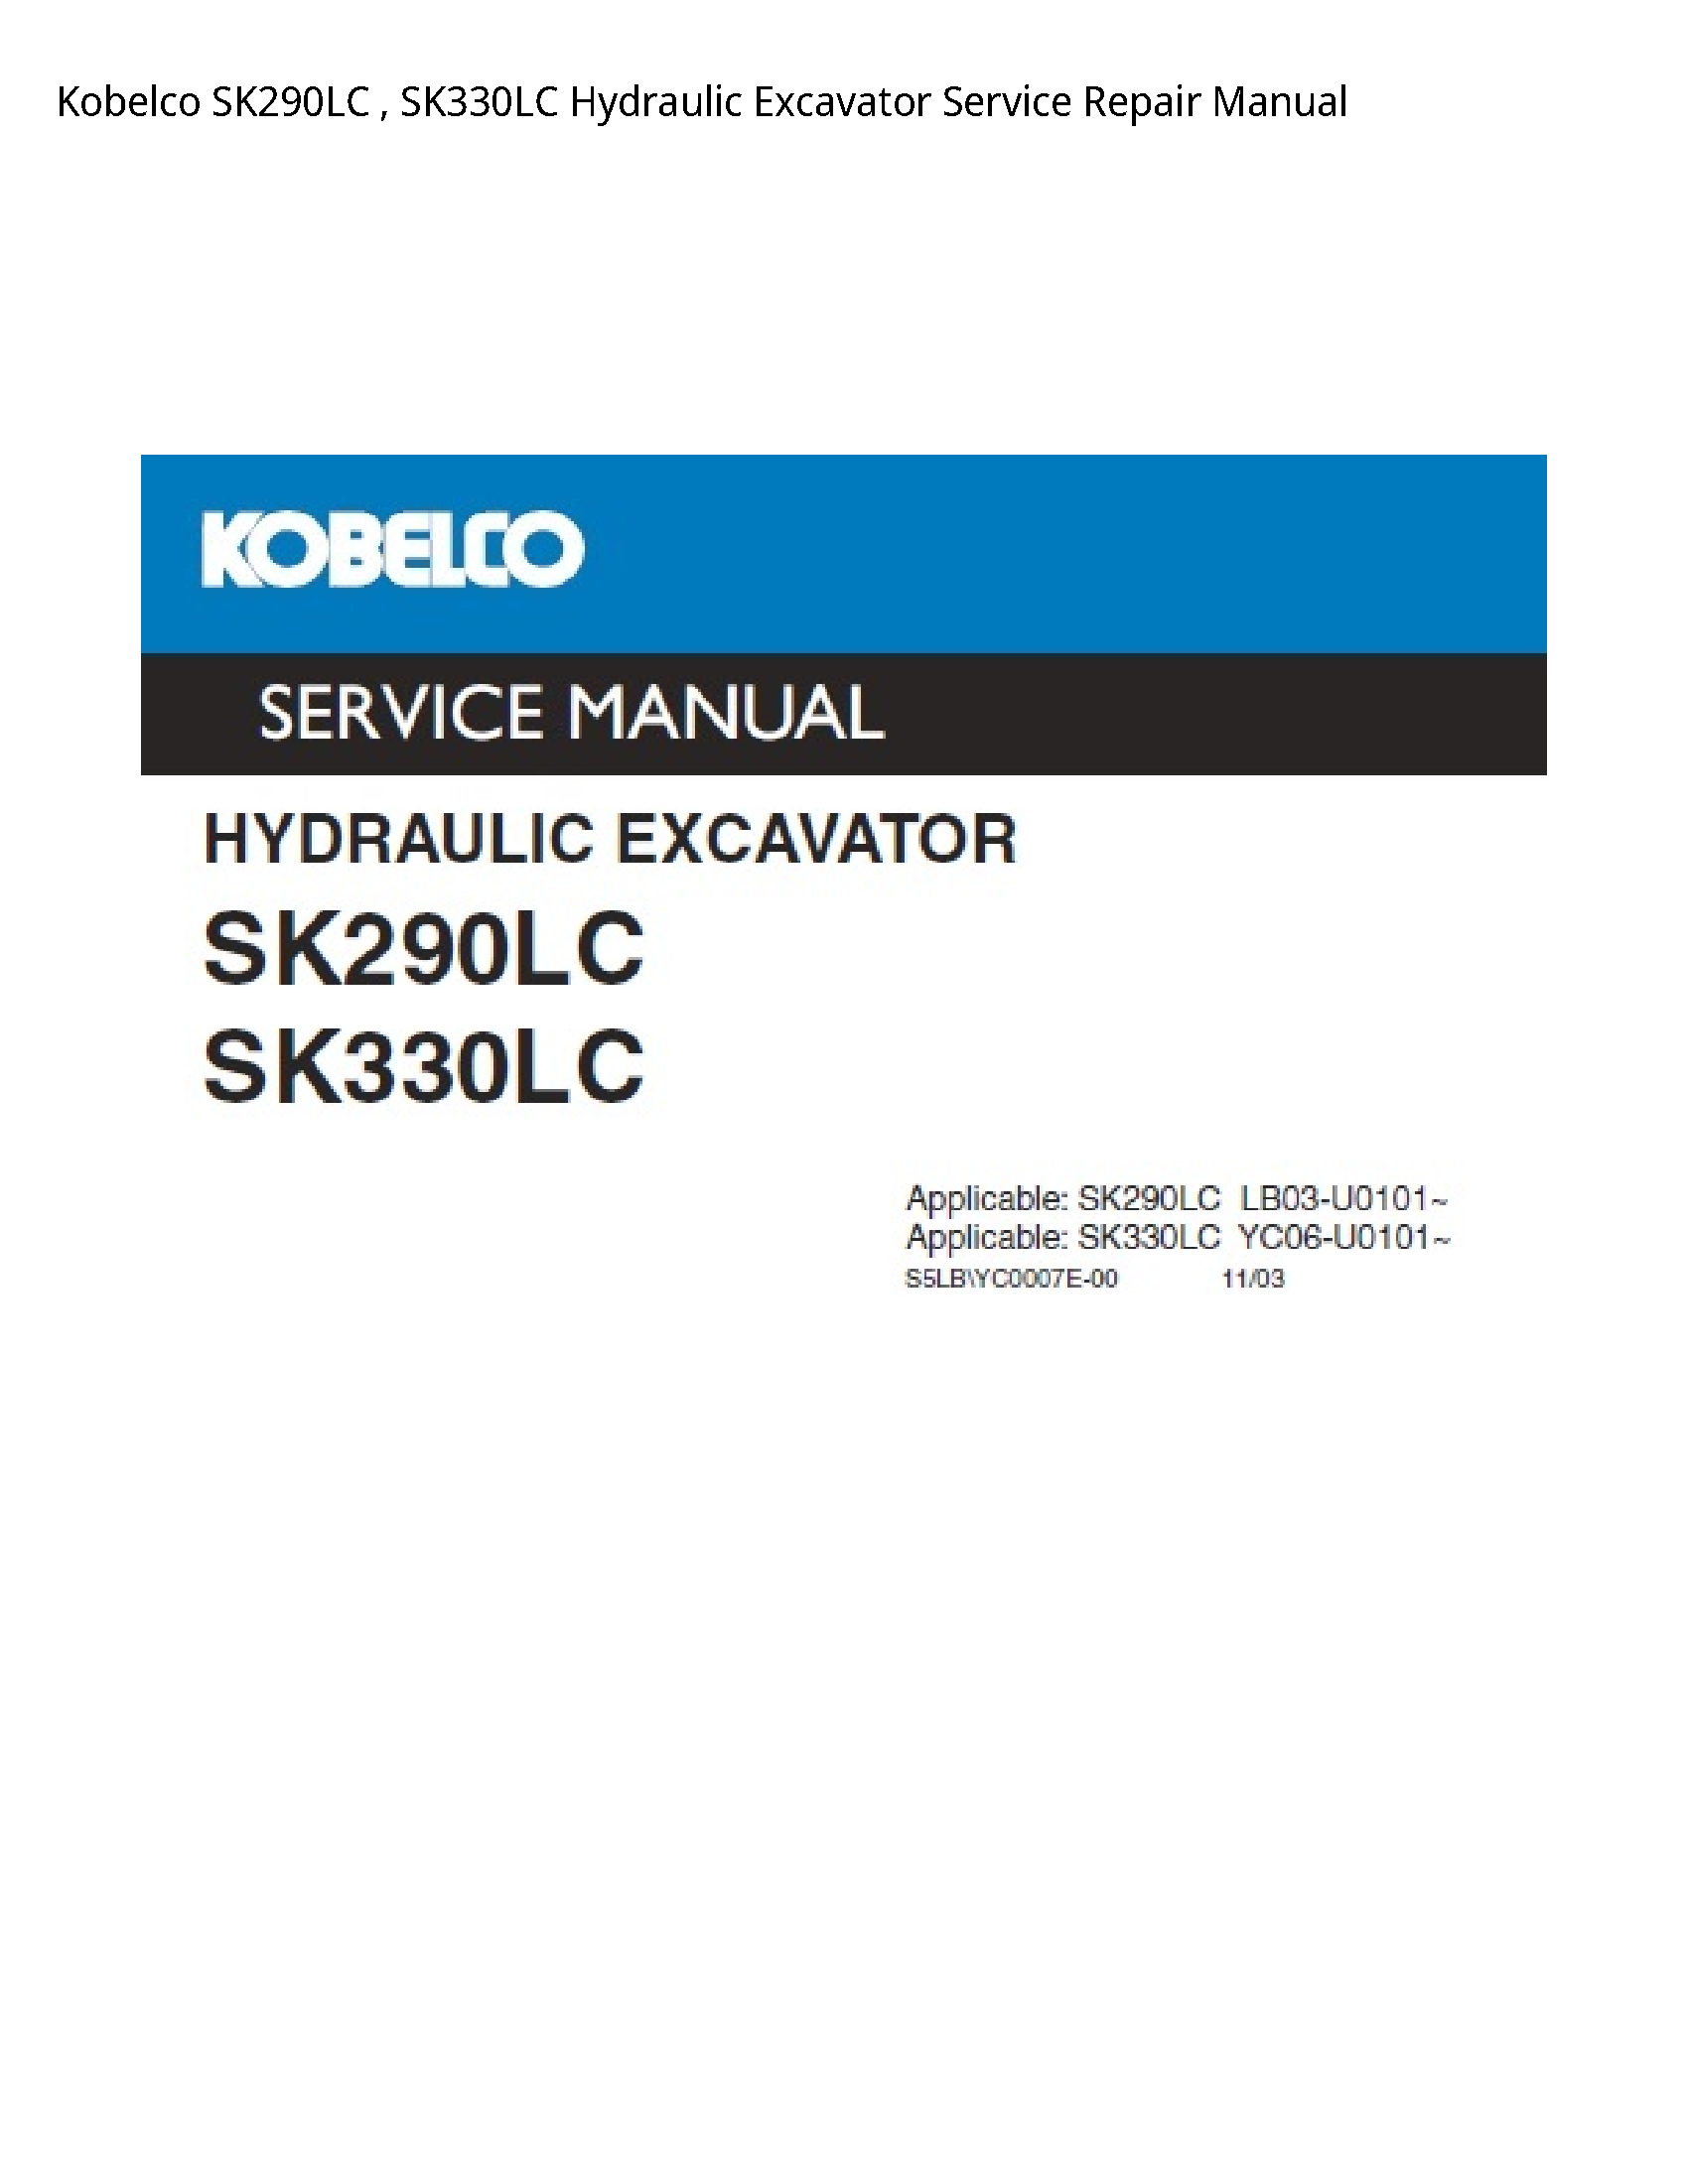 Kobelco SK290LC Hydraulic Excavator manual